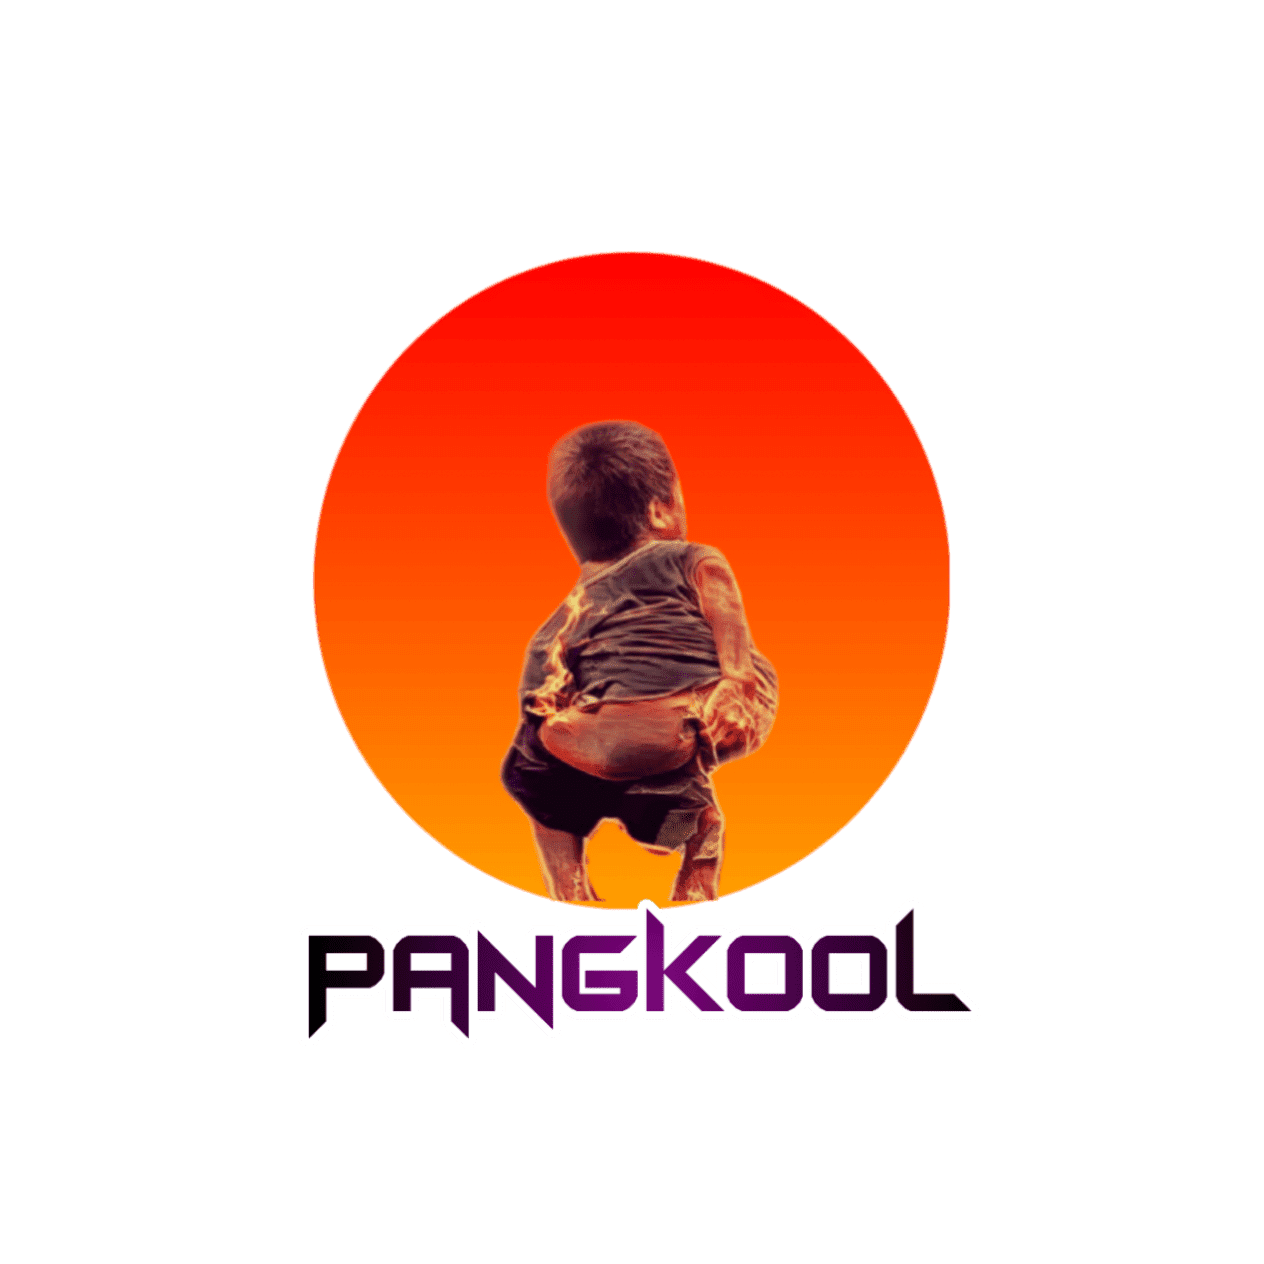 PangkooL